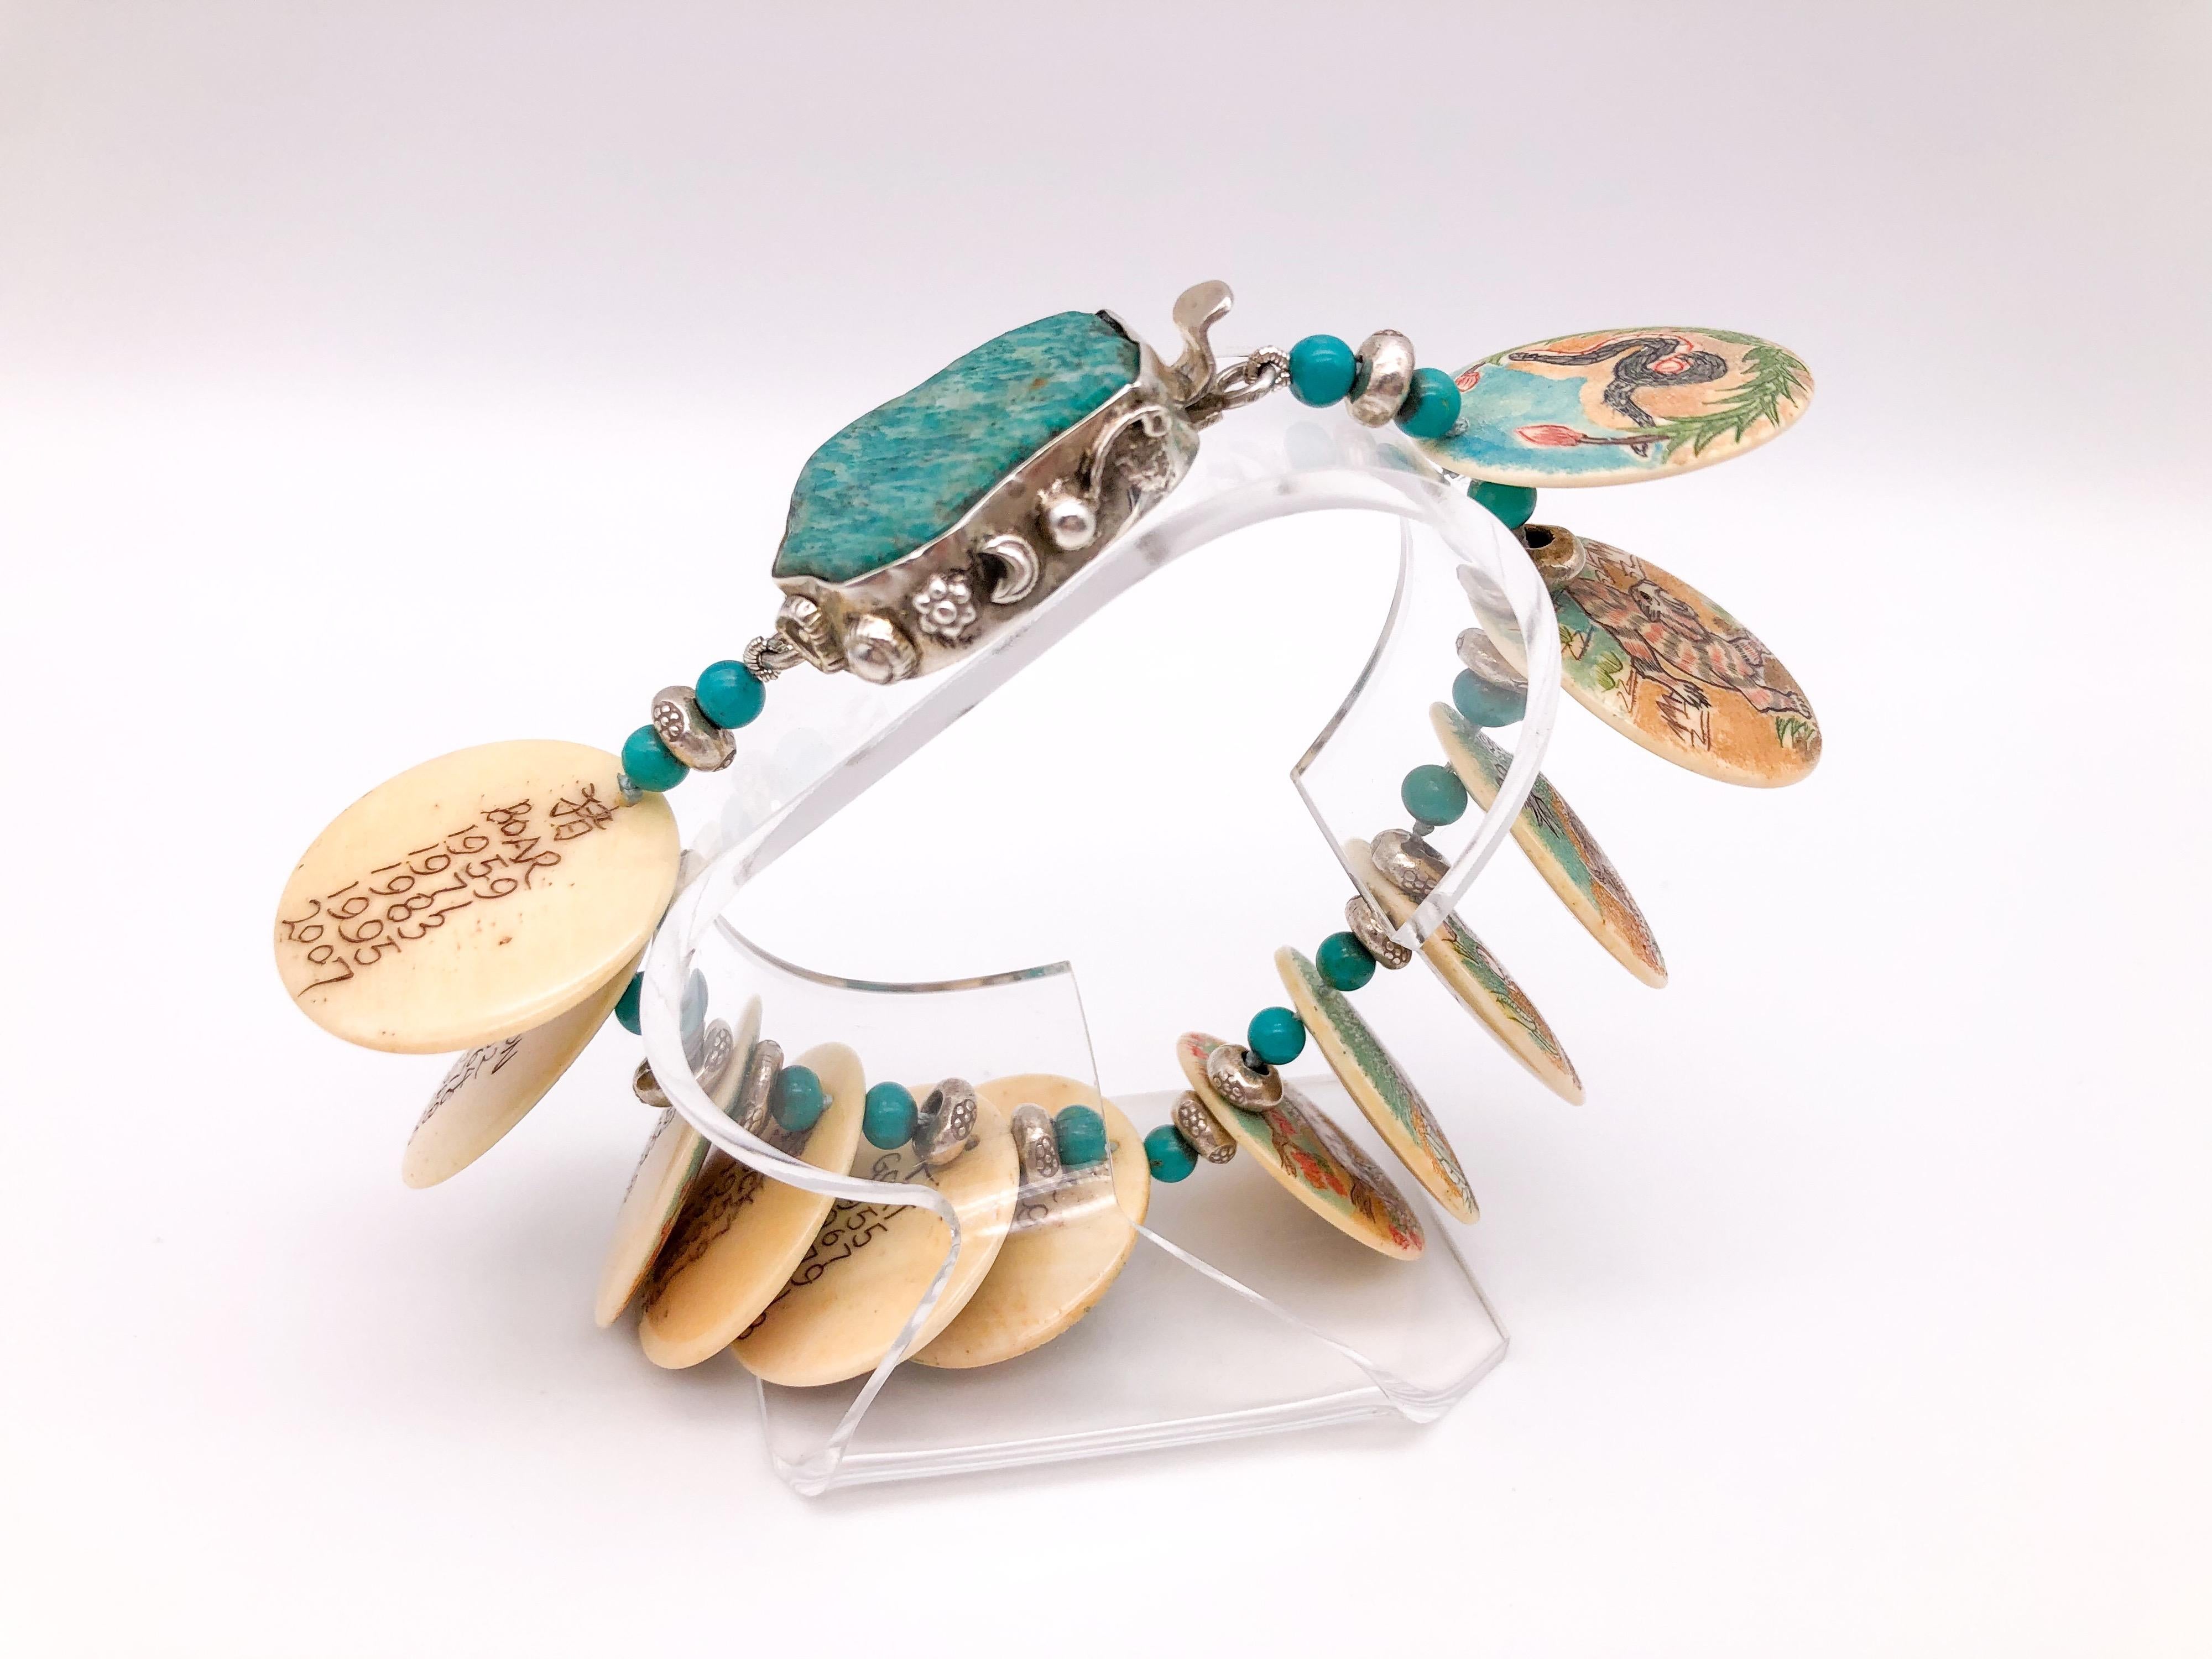 Contemporain A.Jeschel Styling - Bracelet en turquoise du Zodiac chinois en vente